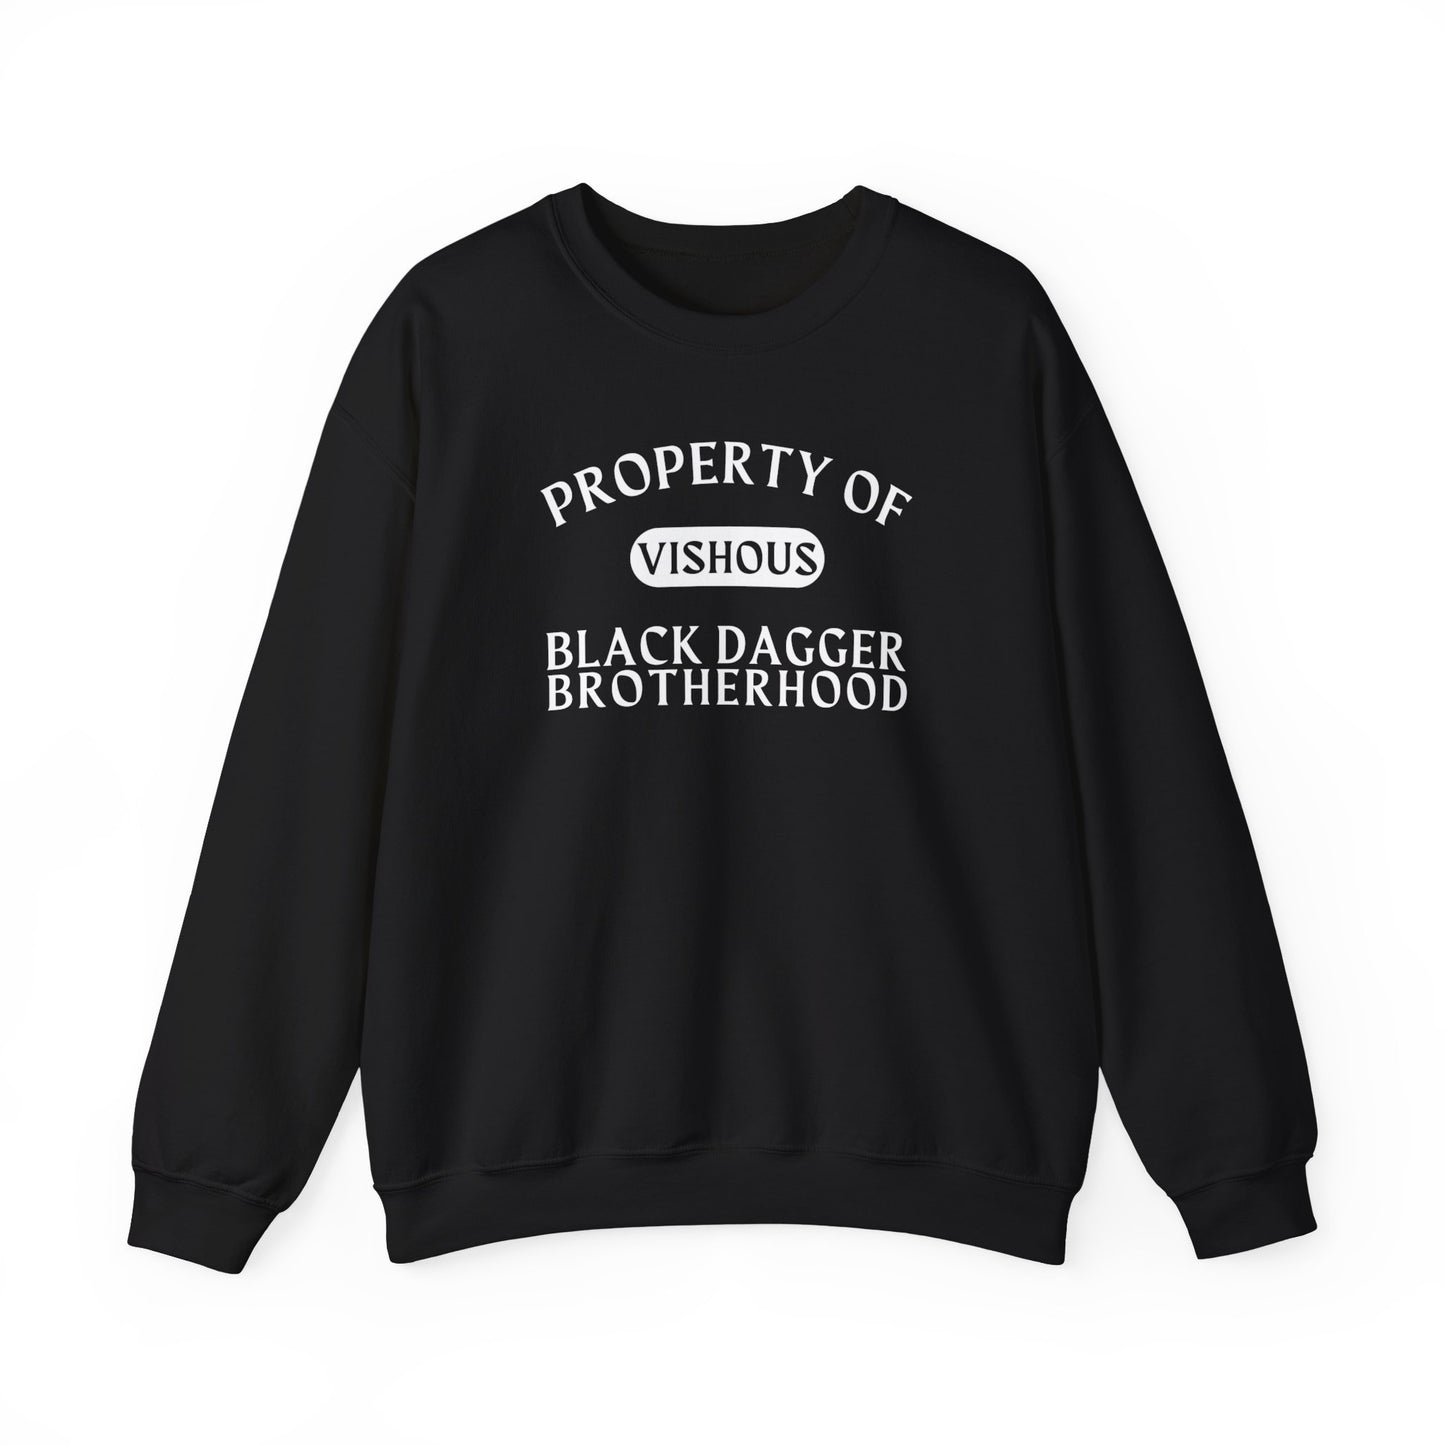 Vishous - Black Dagger Brotherhood Crewneck Sweatshirt Pullover